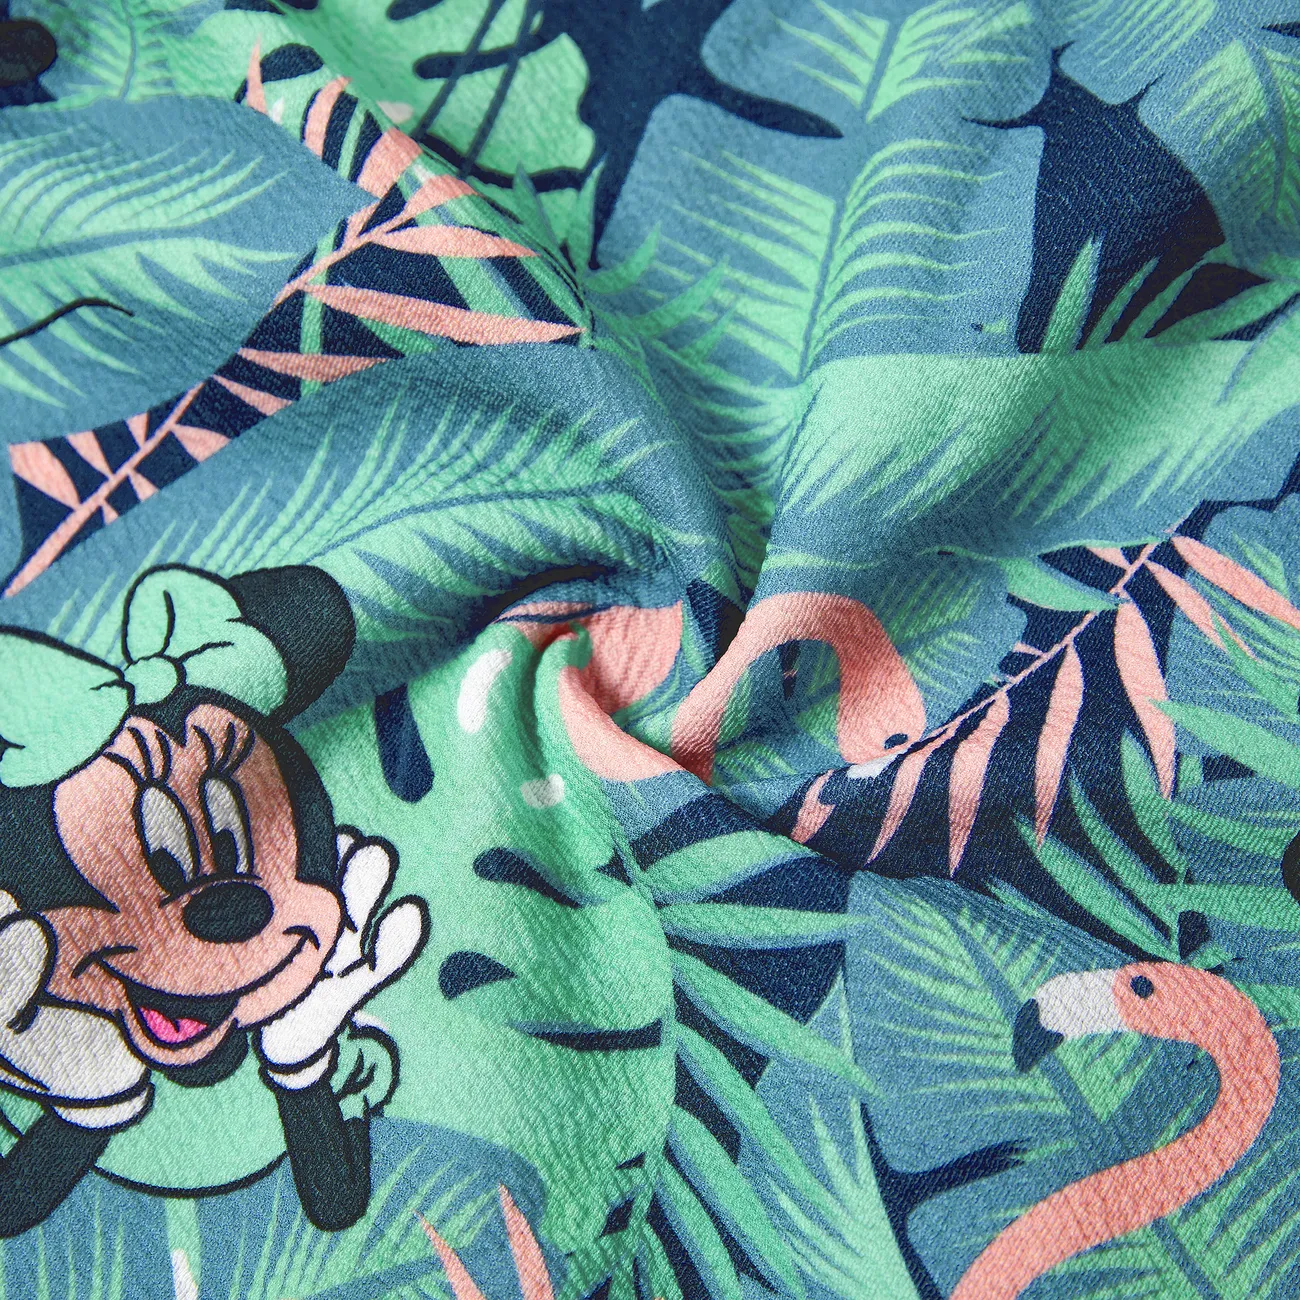 Disney Mickey and Friends 母親節 全家裝 熱帶植物花卉 短袖 親子裝 套裝 綠白 big image 1